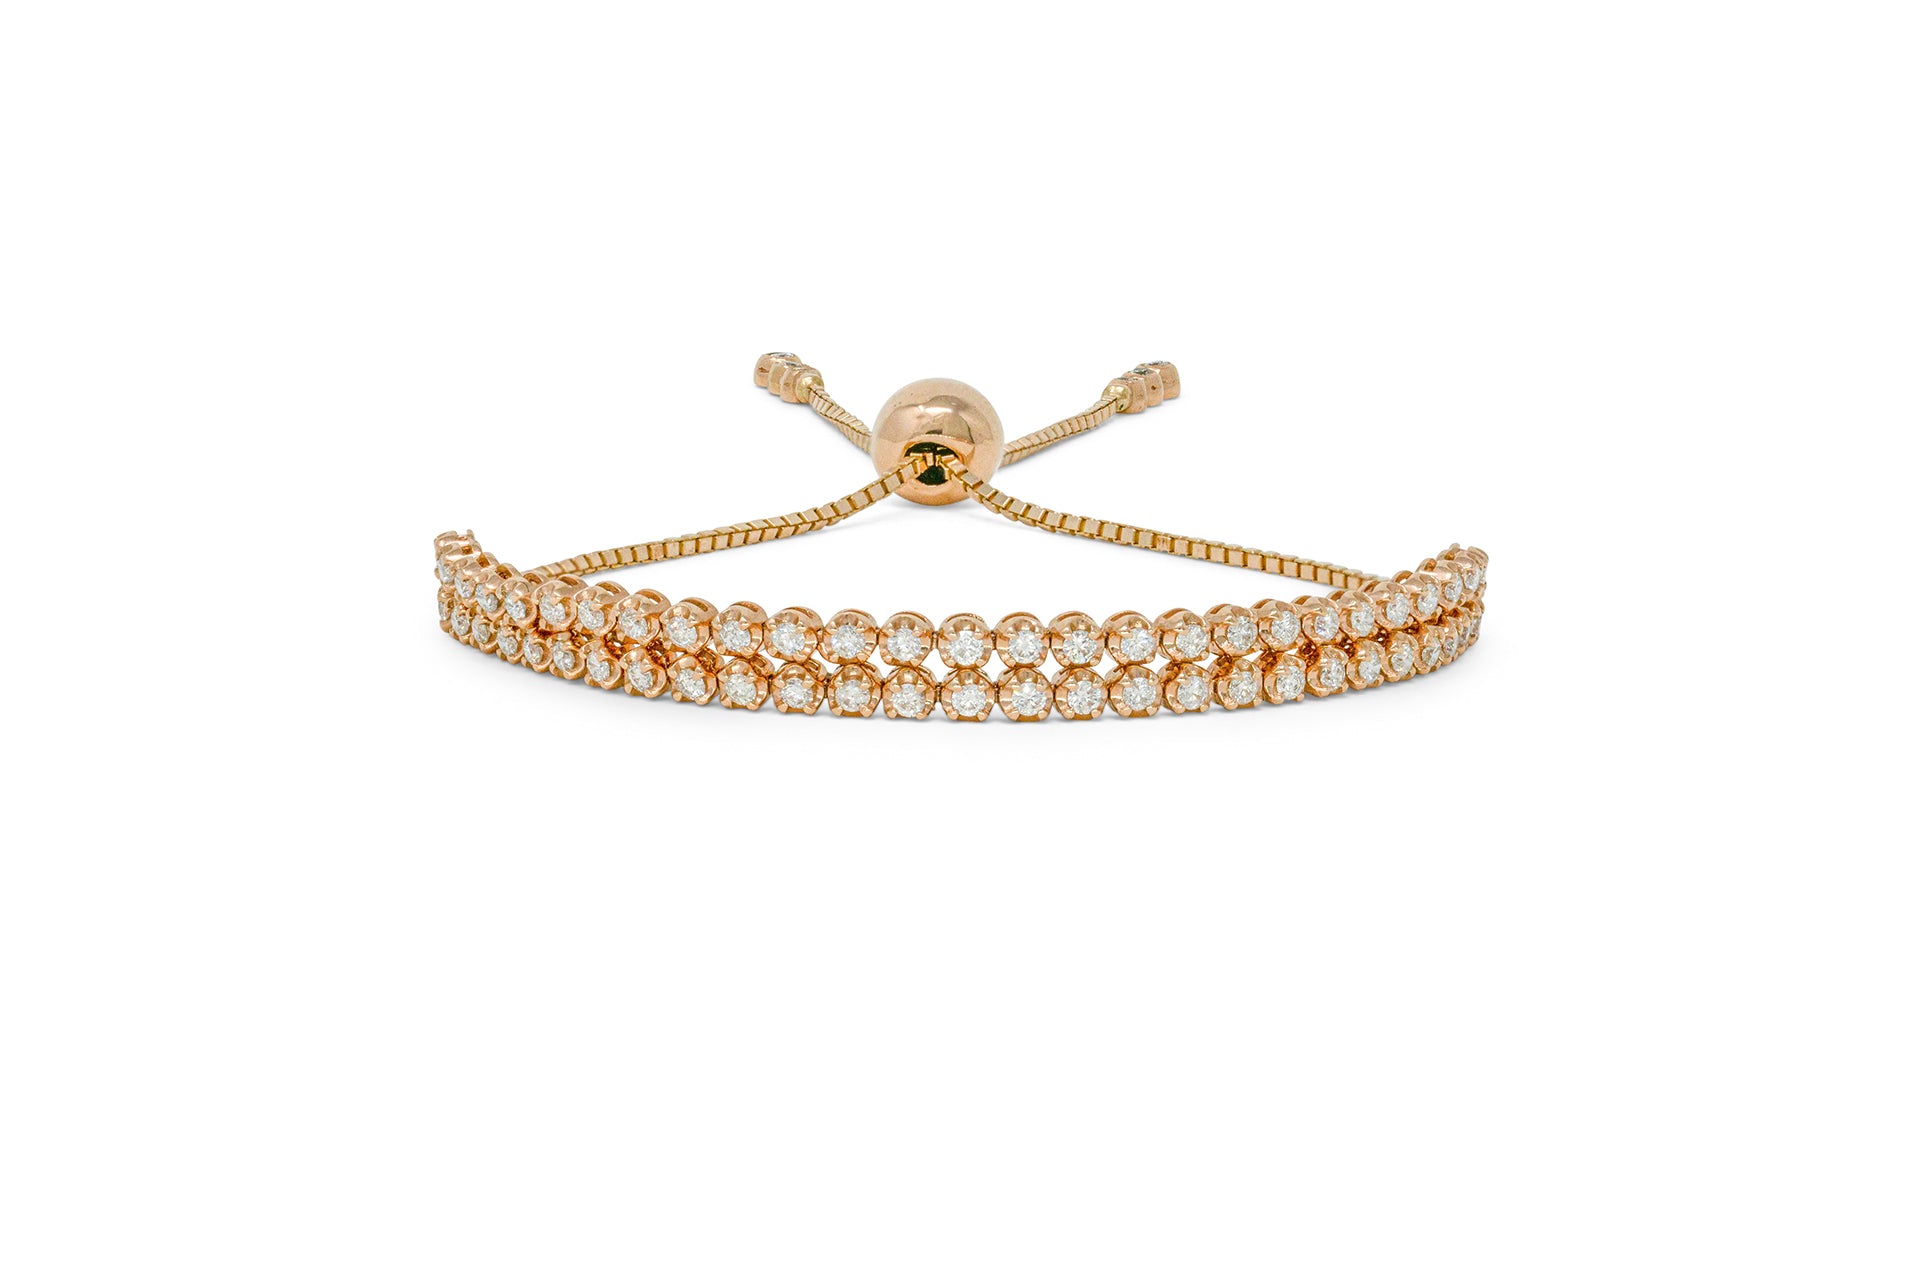 0.93 ct Mens Diamond Rubber Bracelet-Certified Jewelry 14K Gold / Natural Diamonds / Rose Gold